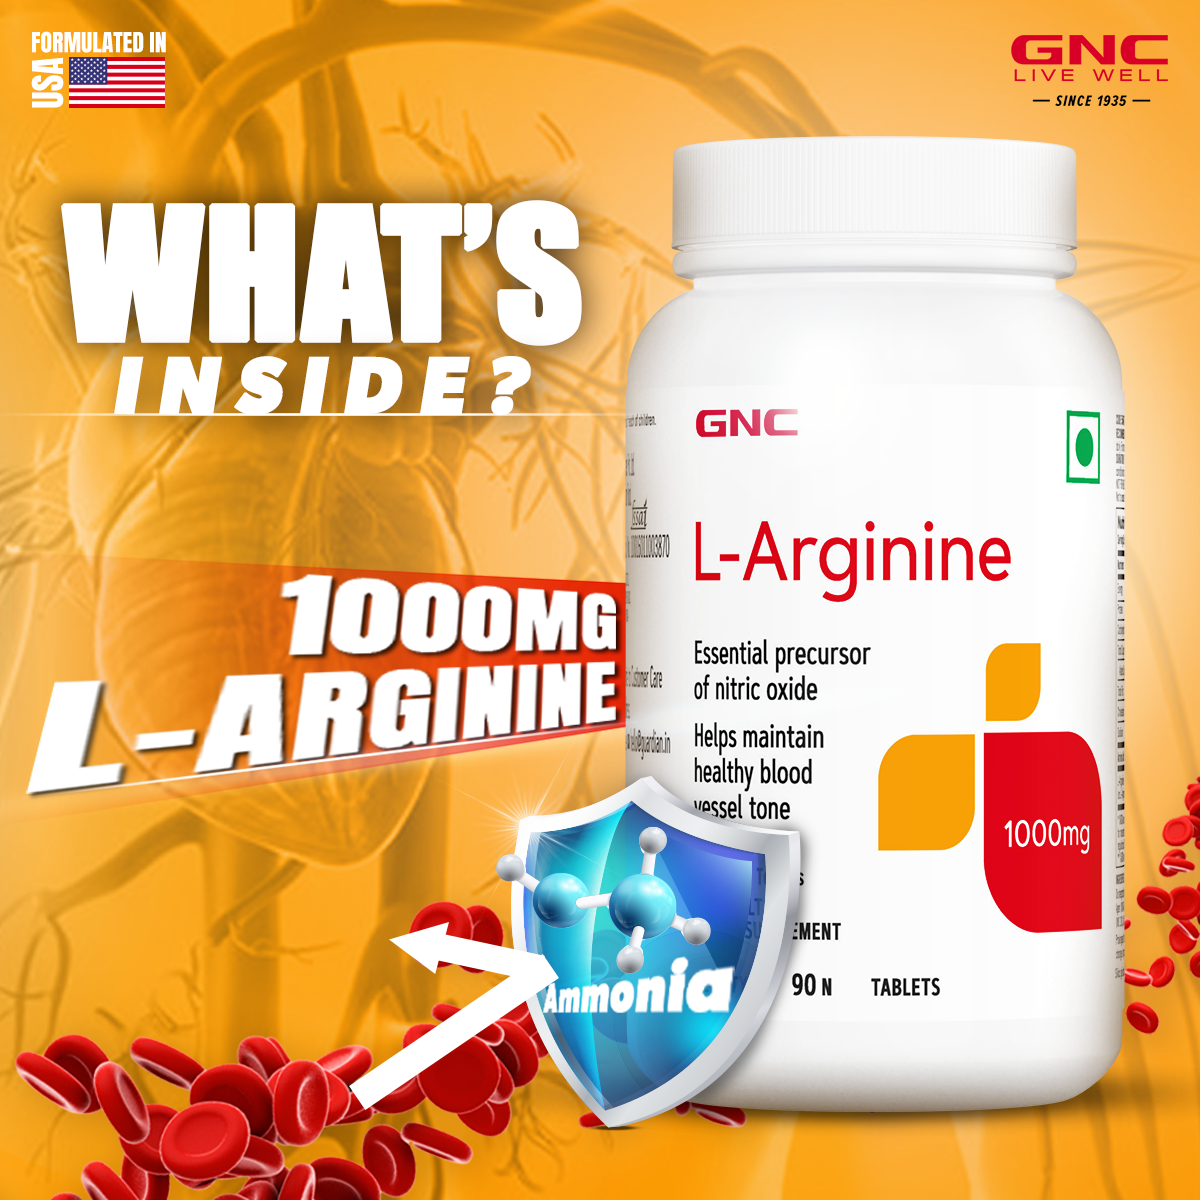 GNC L-Arginine 1000mg - Boosts Energy & Endurance | Improves Blood Flow